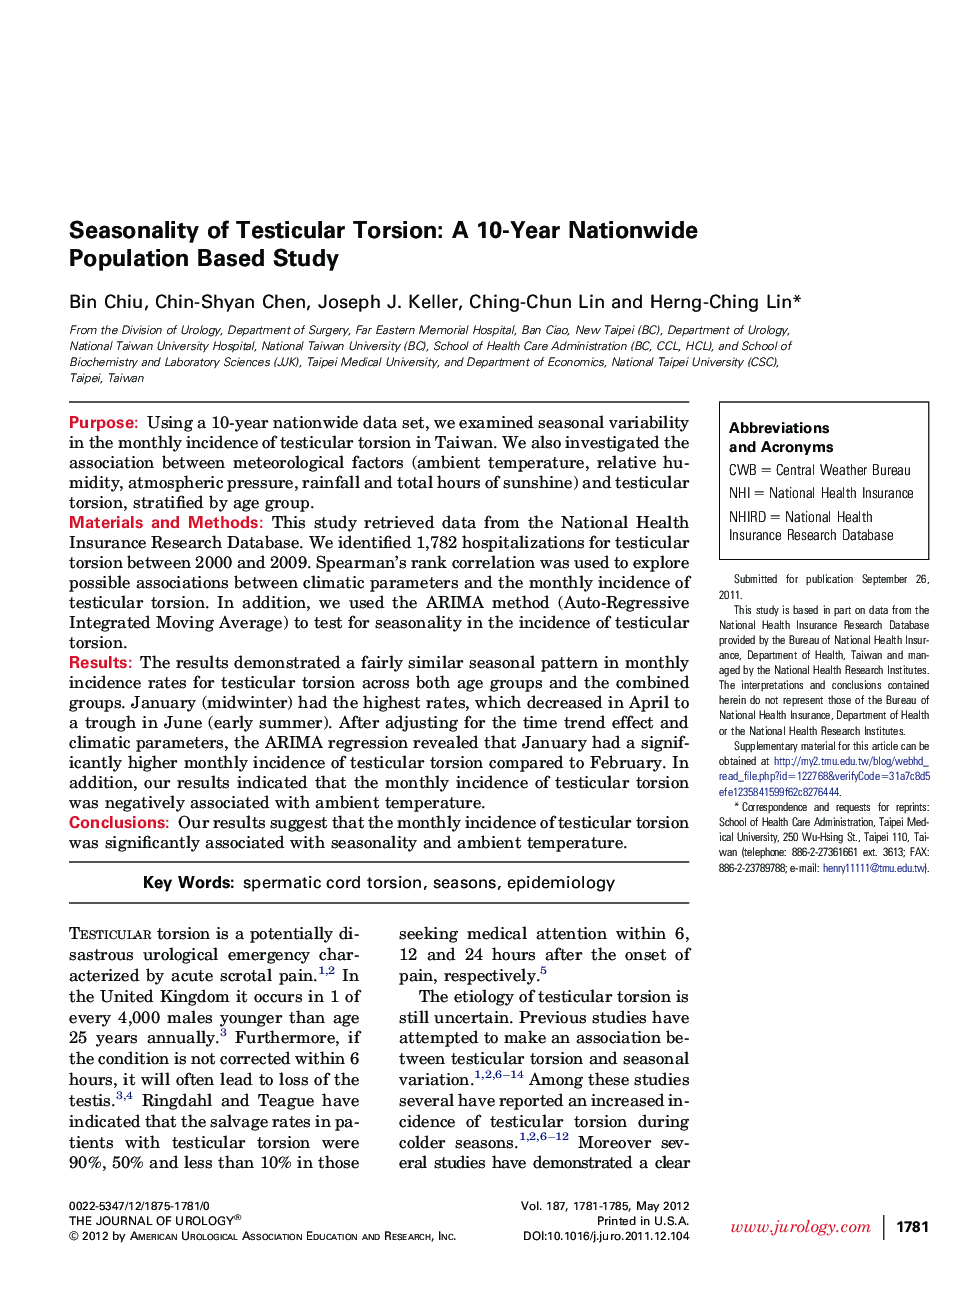 Seasonality of Testicular Torsion: A 10-Year Nationwide Population Based Study